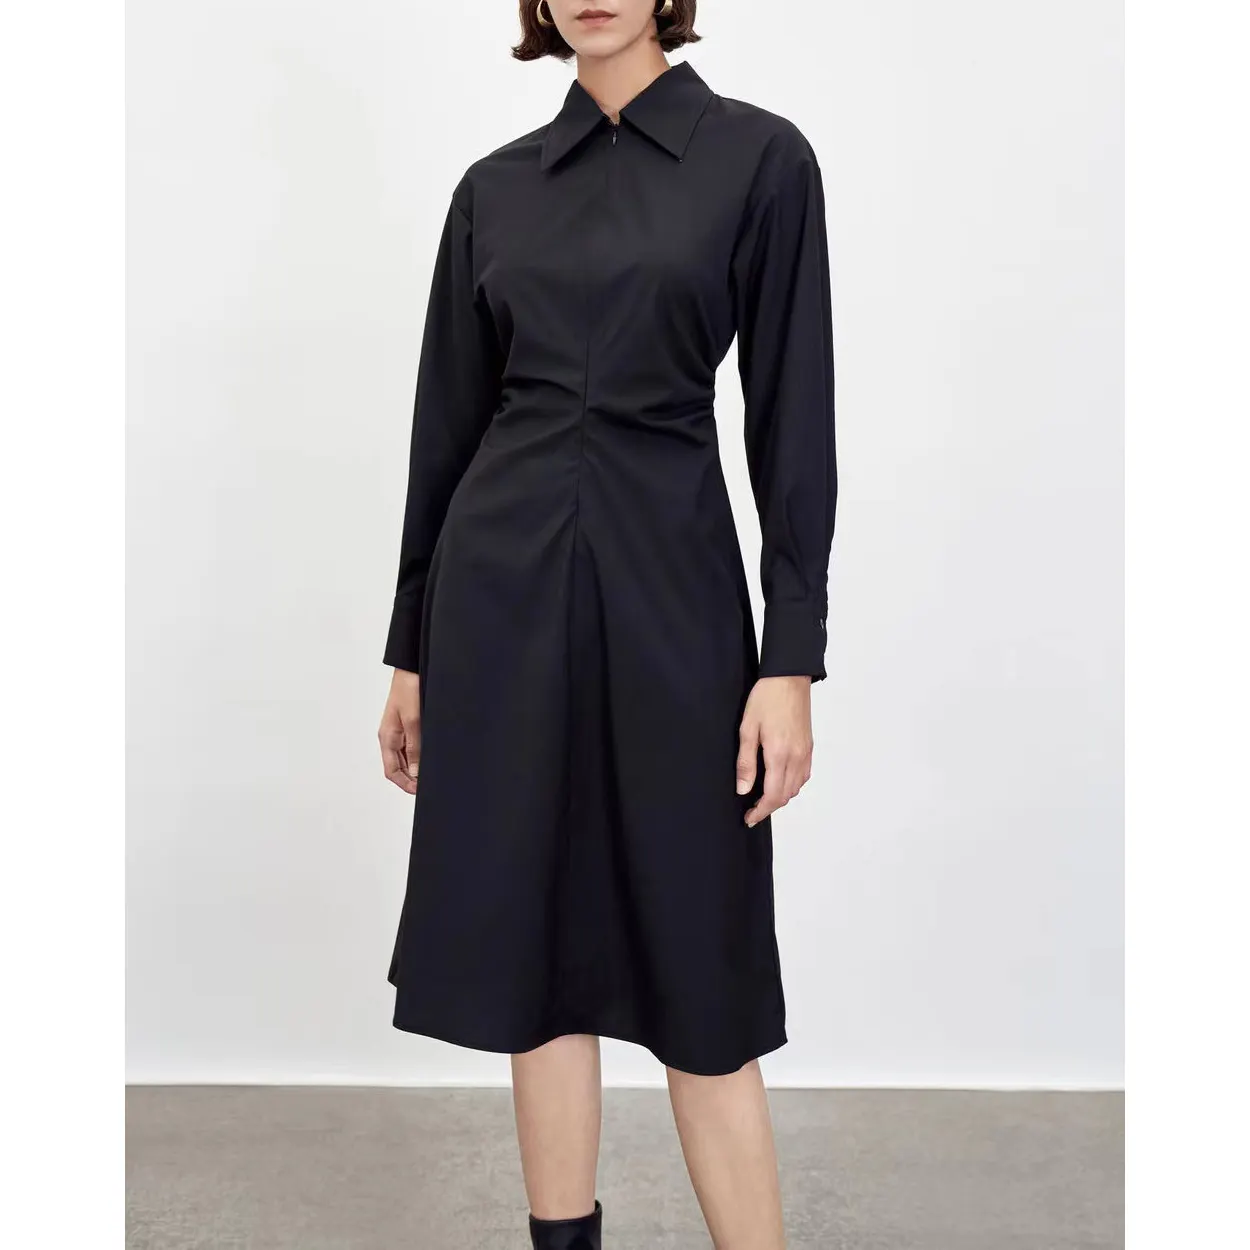 Clothing Shirt Dresses Elegant Casual Long Sleeve Women Midi Black Business Dresses